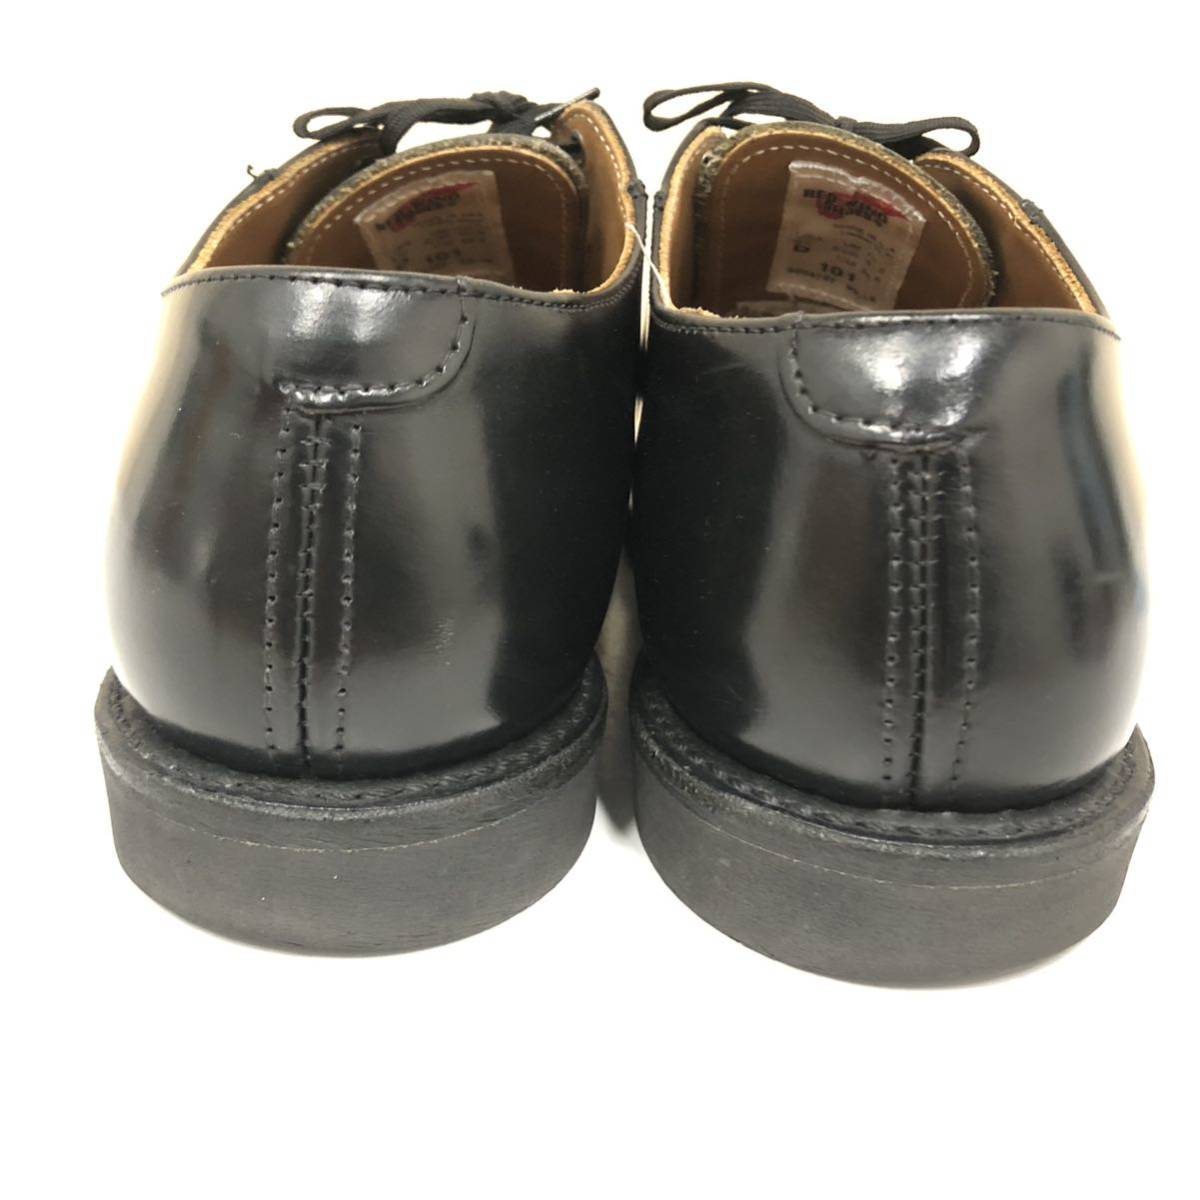 【RED WING】レッドウイング★シューズ ポストマン オックスフォード 靴 サイズUS8.5(26.5cm) 101 ブラック 01_画像3